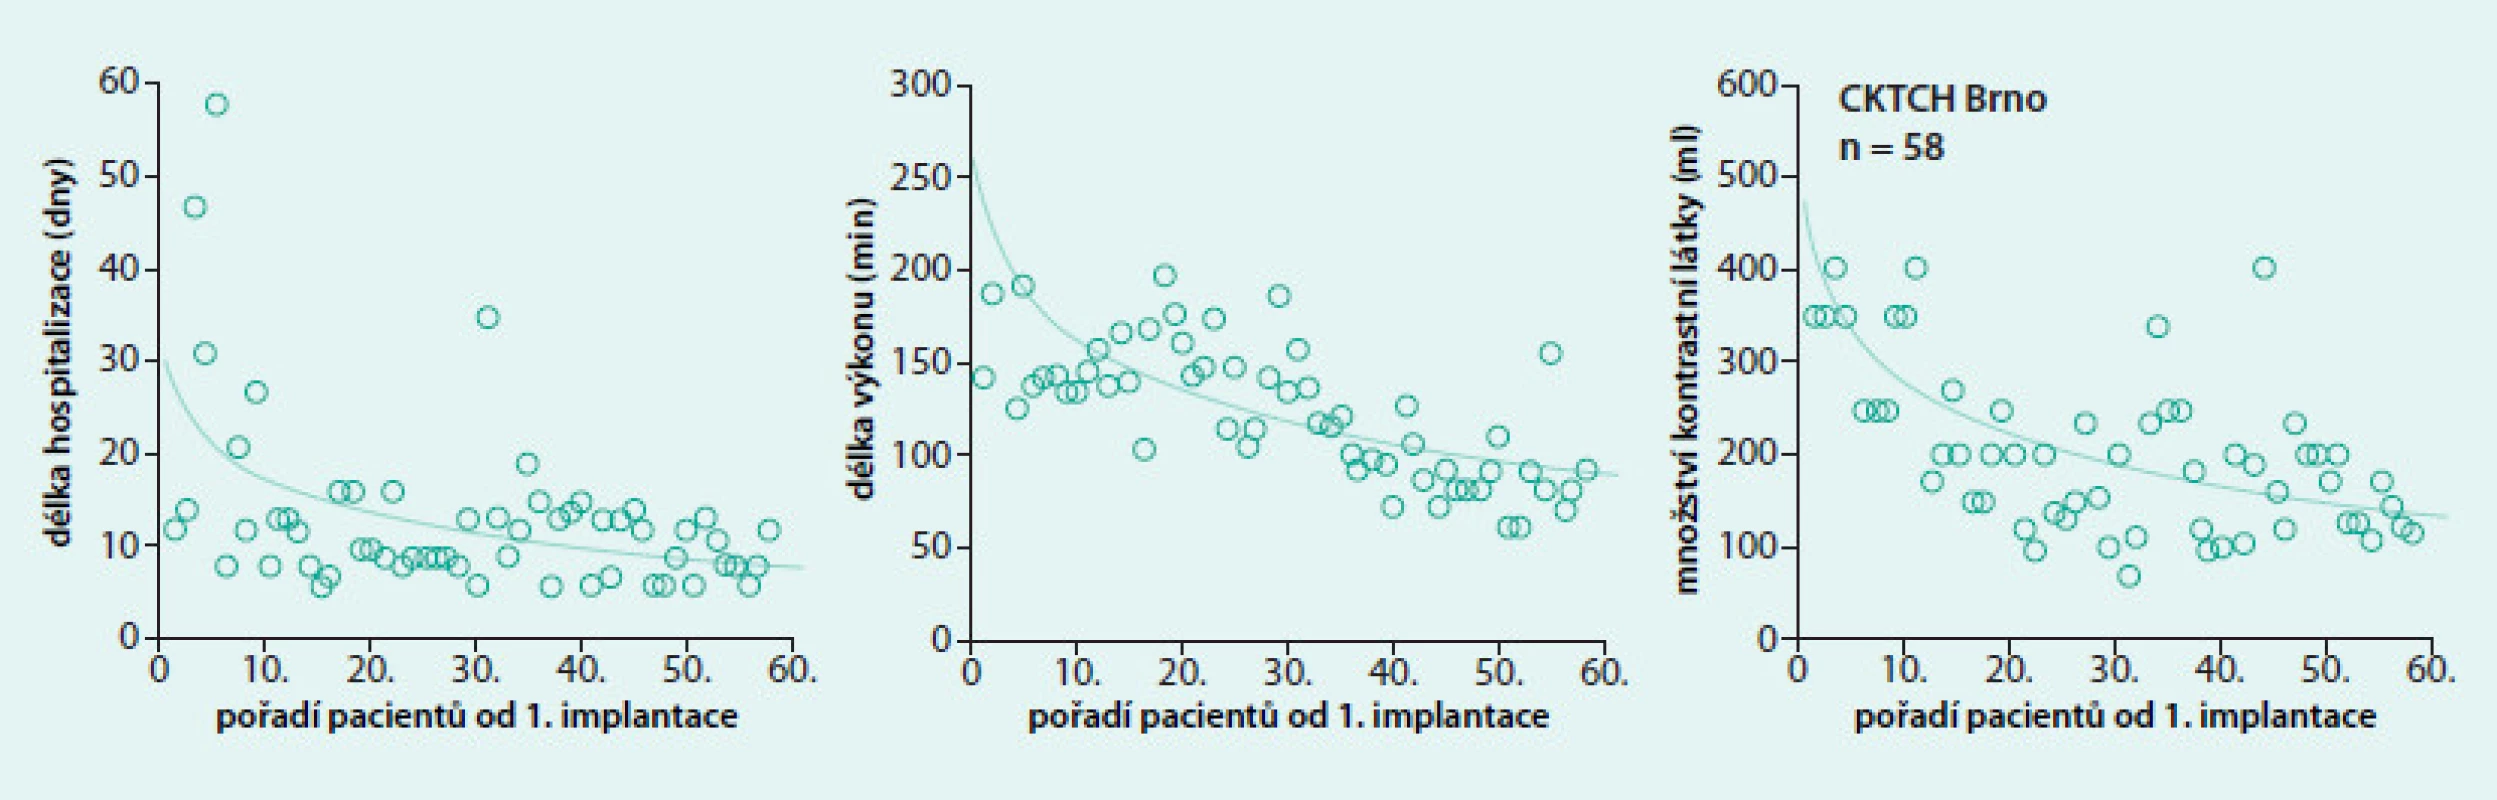 Bodový graf trendu spojitých cílových parametrů dle pořadí pacienta (n = 58)